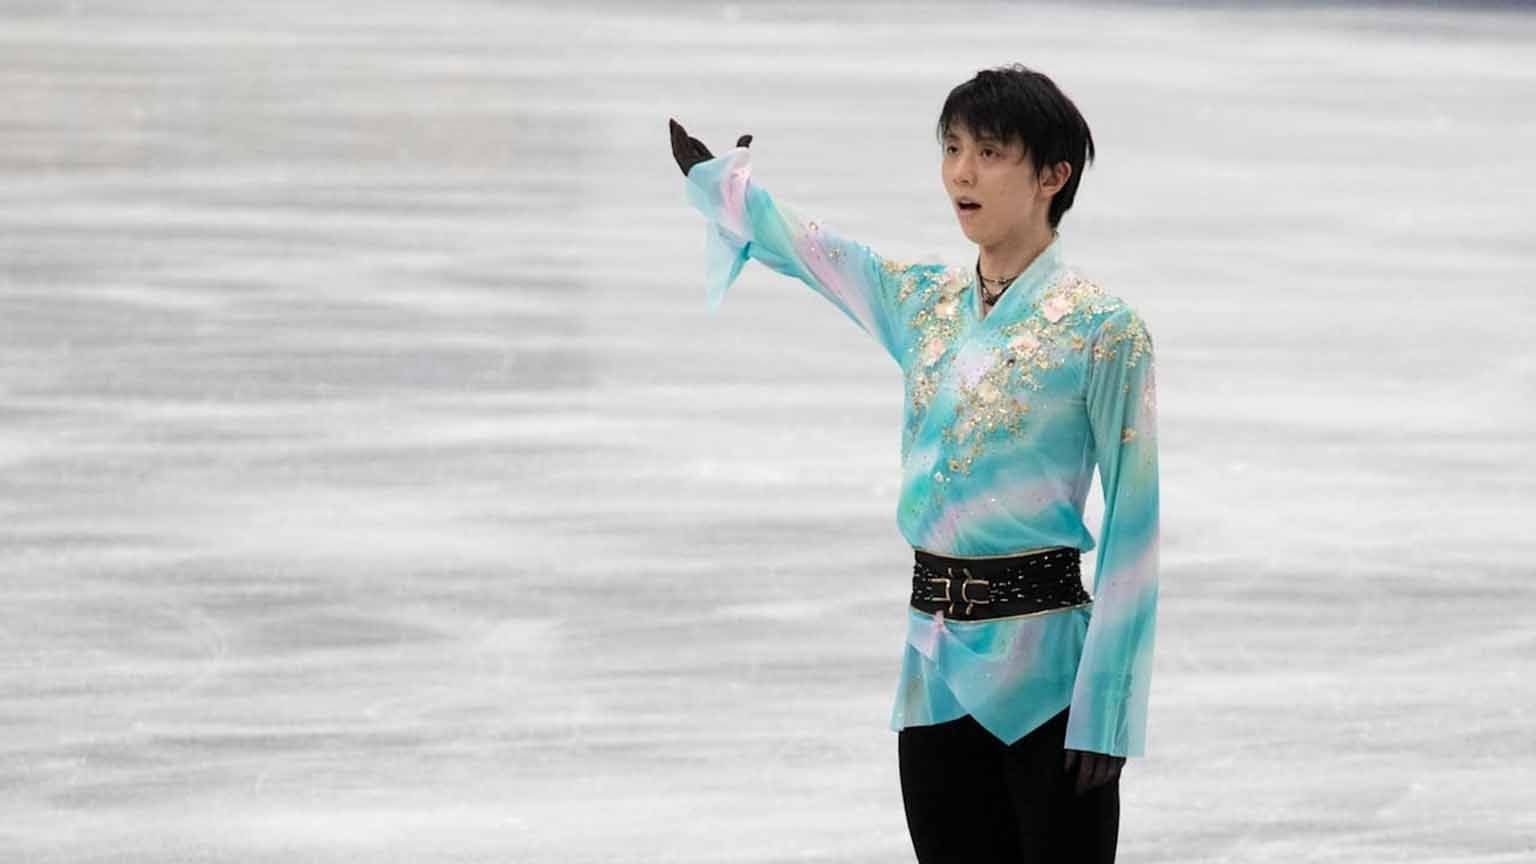 Japan figure skater Yuzuru Hanyu will retire from competitions photo Olympics